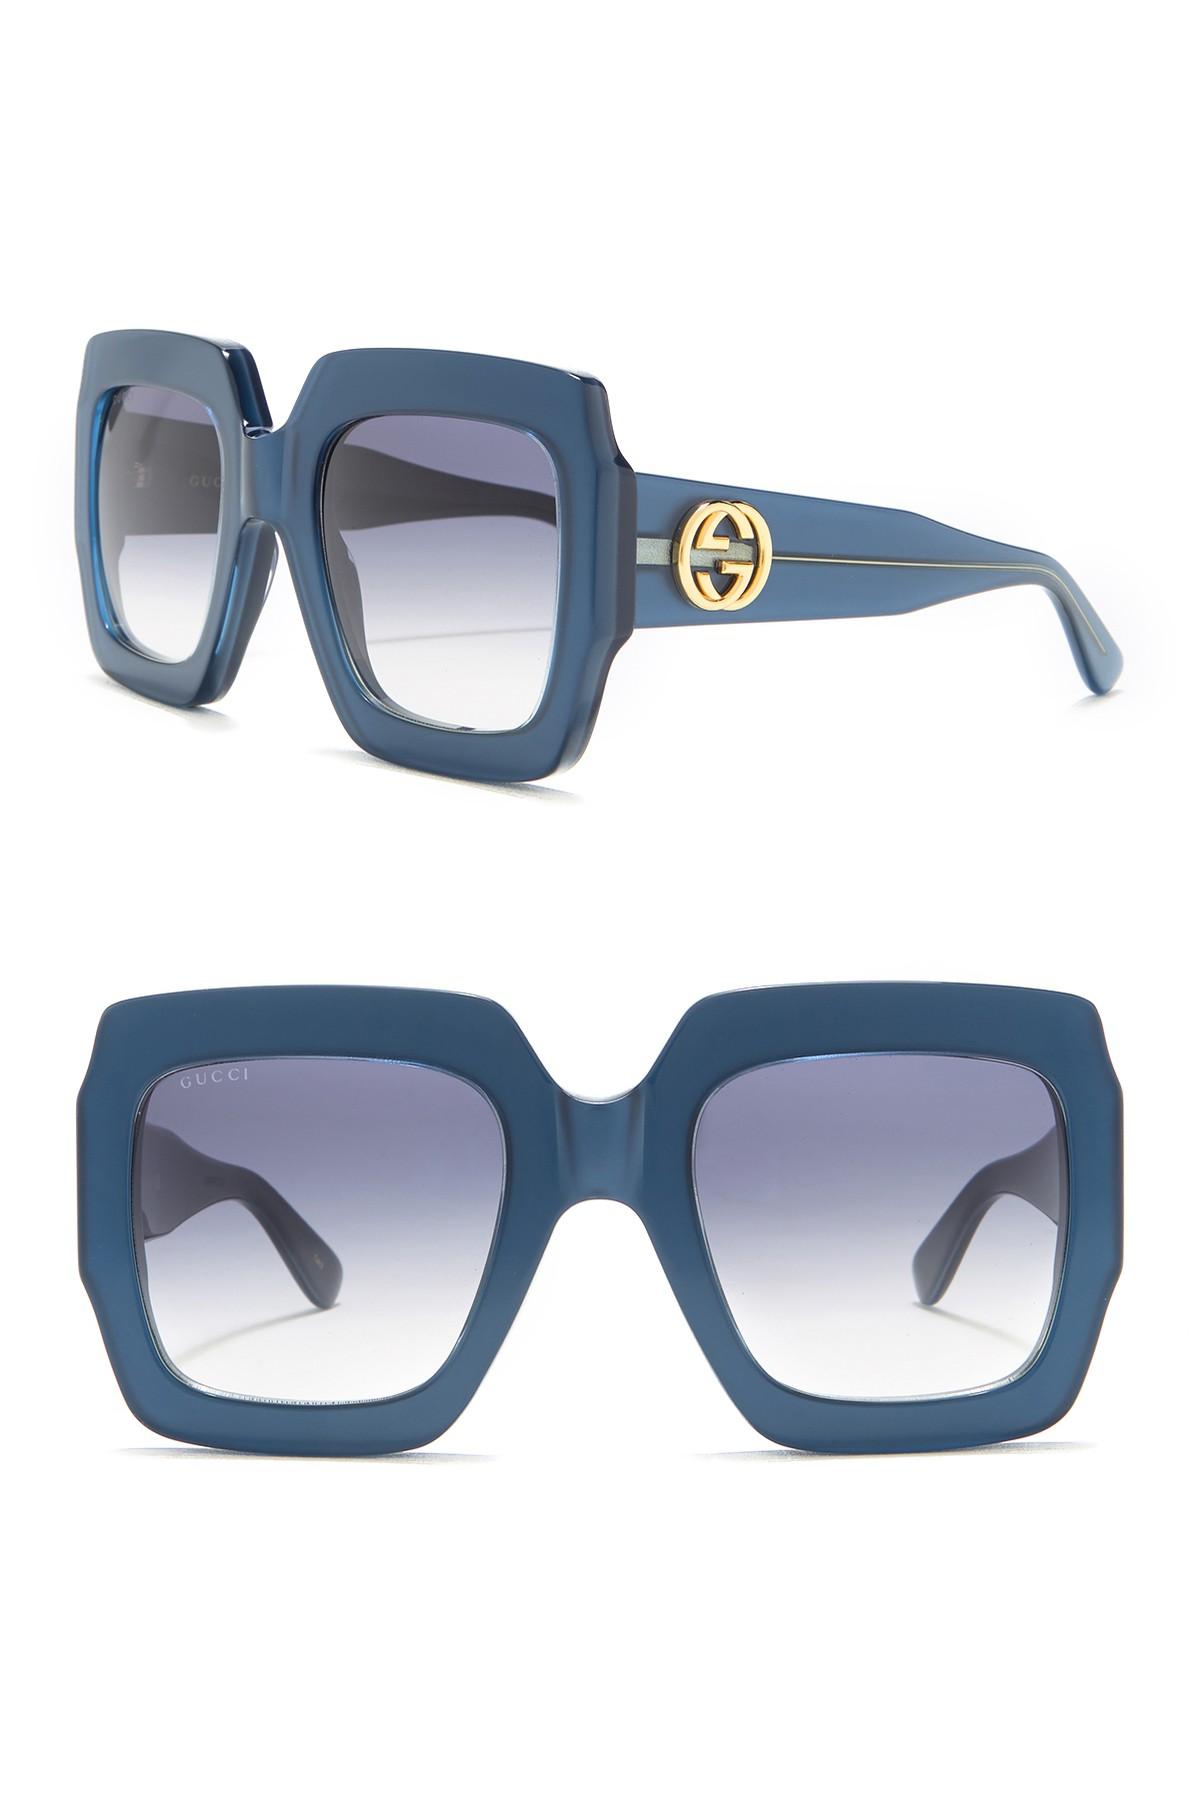 Gucci 1990's Blue Shield Sunglasses – Vintage by Misty